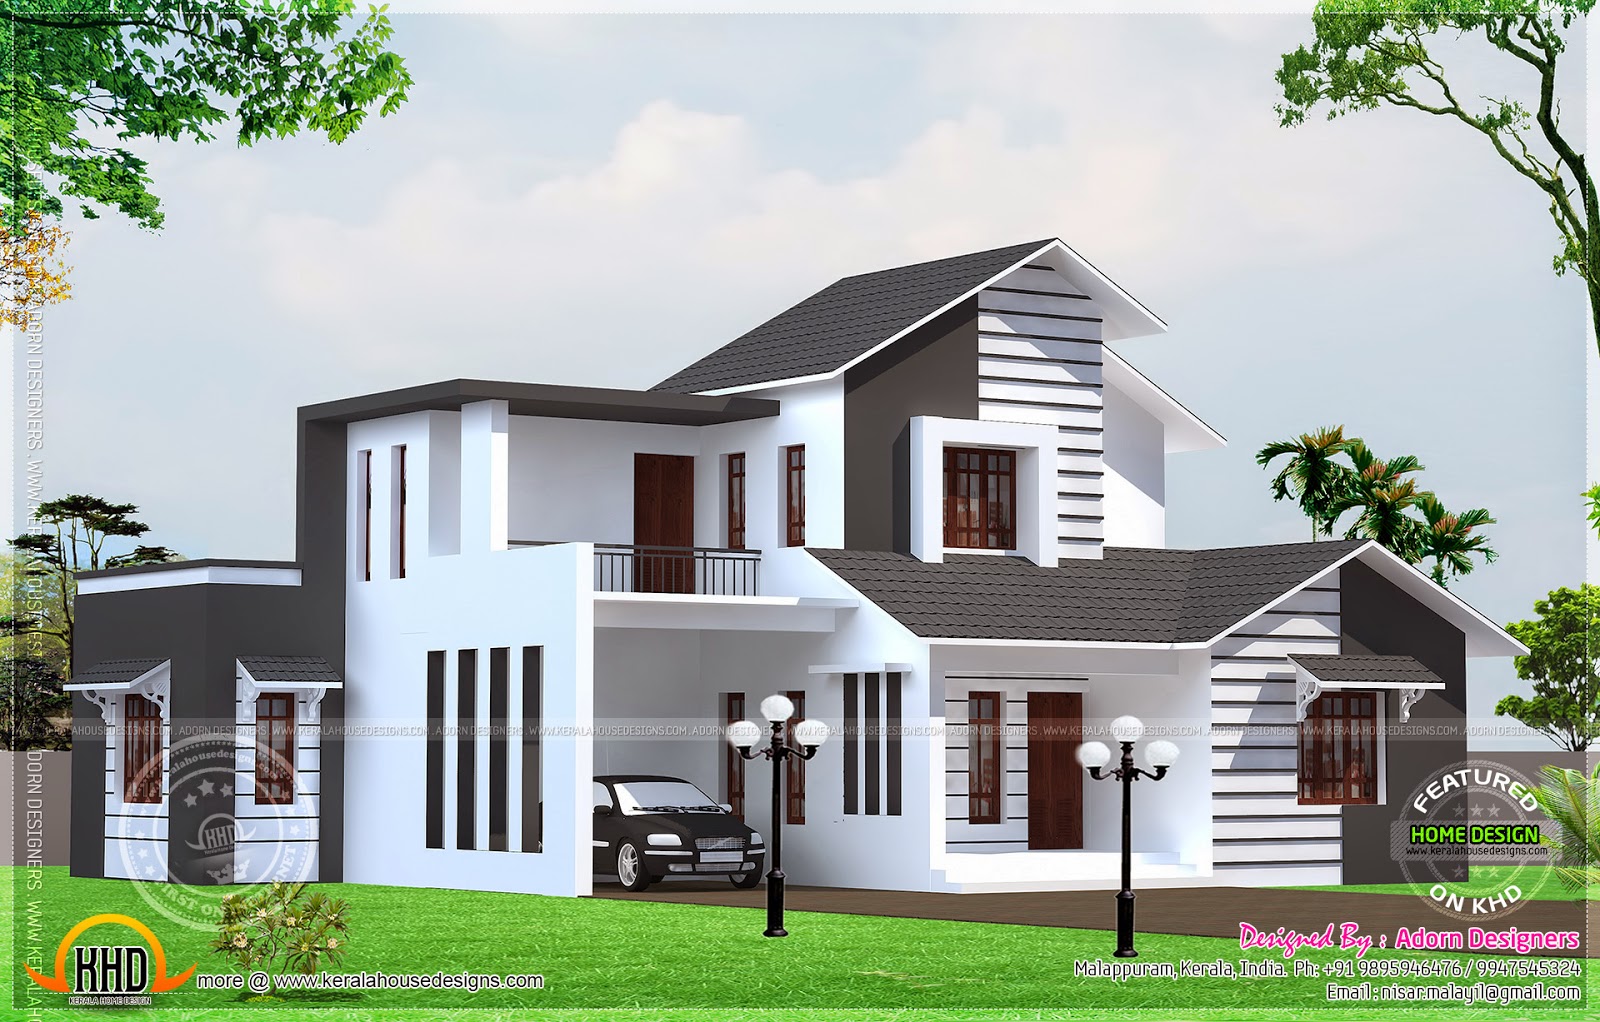 3 bedroom home  design in 1700 sq feet Kerala  home  design 